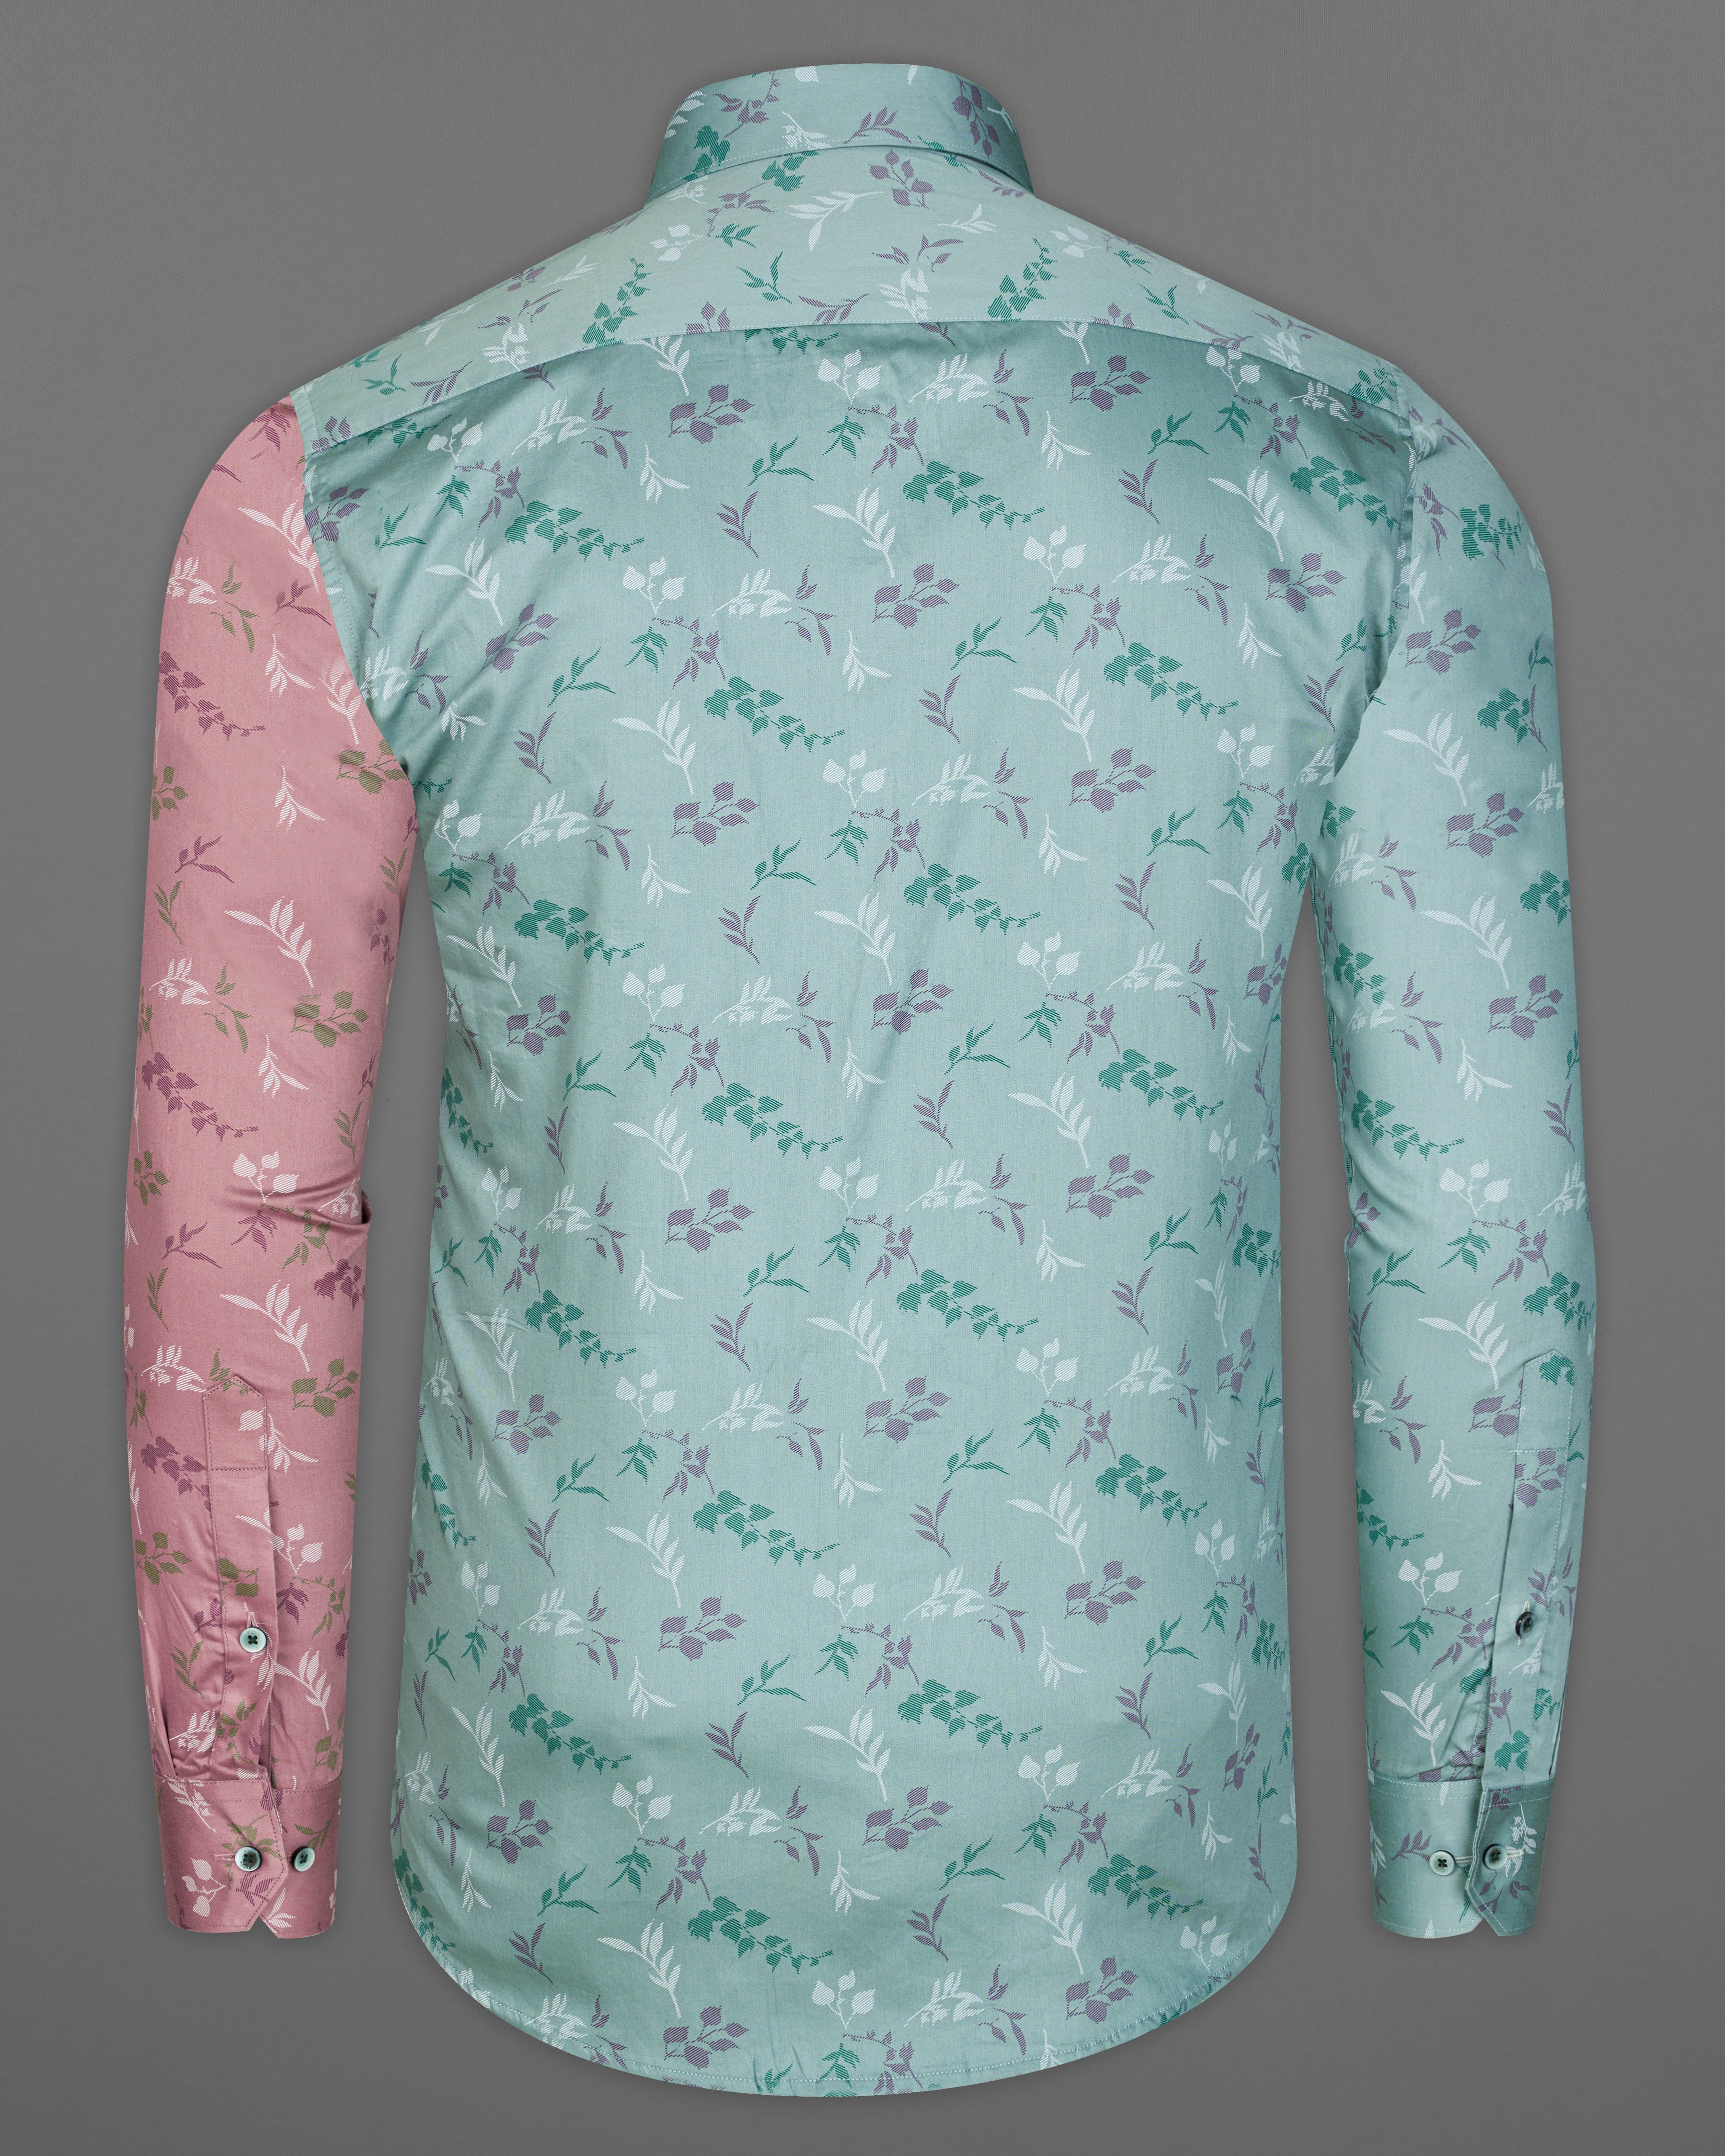 Half Opaque Green with Half Dirty Pink Ditsy Printed Super Soft Premium Cotton Designer Shirt 9373-GR-P88-38, 9373-GR-P88-H-38, 9373-GR-P88-39, 9373-GR-P88-H-39, 9373-GR-P88-40, 9373-GR-P88-H-40, 9373-GR-P88-42, 9373-GR-P88-H-42, 9373-GR-P88-44, 9373-GR-P88-H-44, 9373-GR-P88-46, 9373-GR-P88-H-46, 9373-GR-P88-48, 9373-GR-P88-H-48, 9373-GR-P88-50, 9373-GR-P88-H-50, 9373-GR-P88-52, 9373-GR-P88-H-52